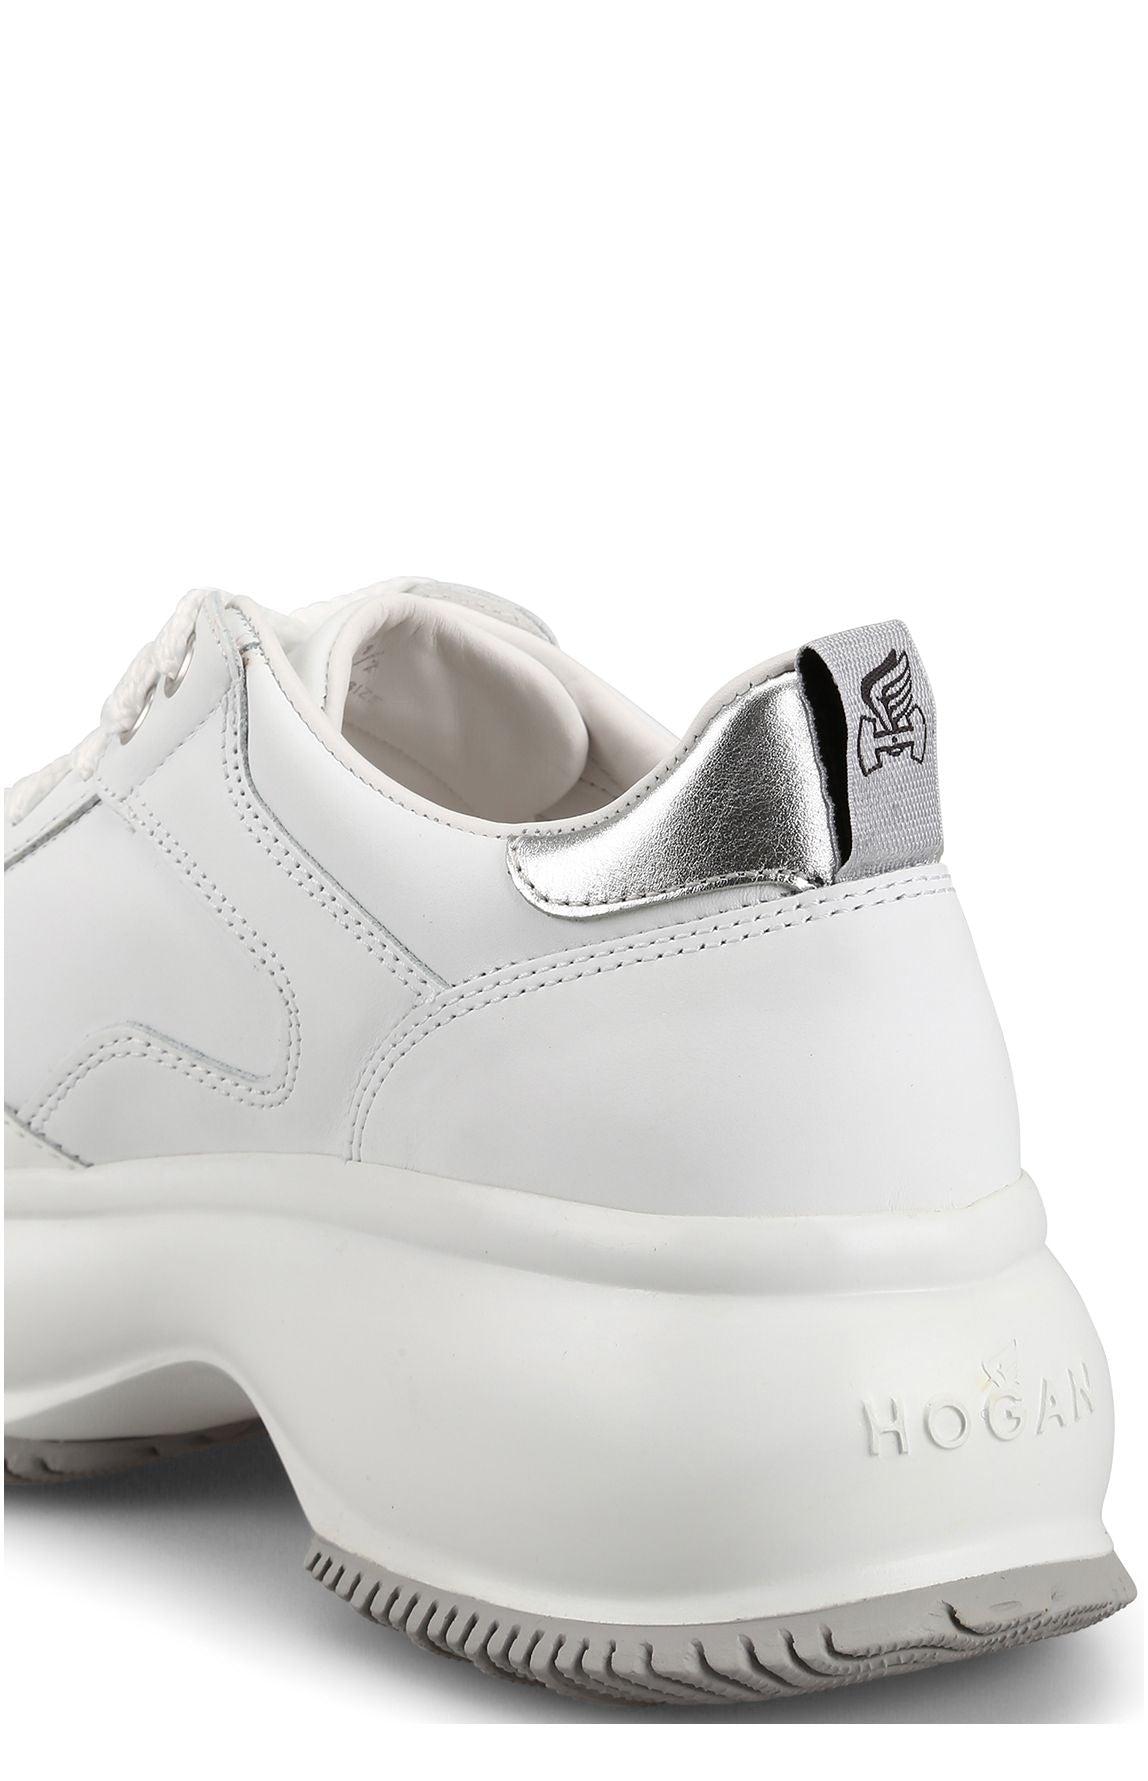 vertraging Defecte glans Hogan Maxi I Active White Leather Sneakers | Lyst